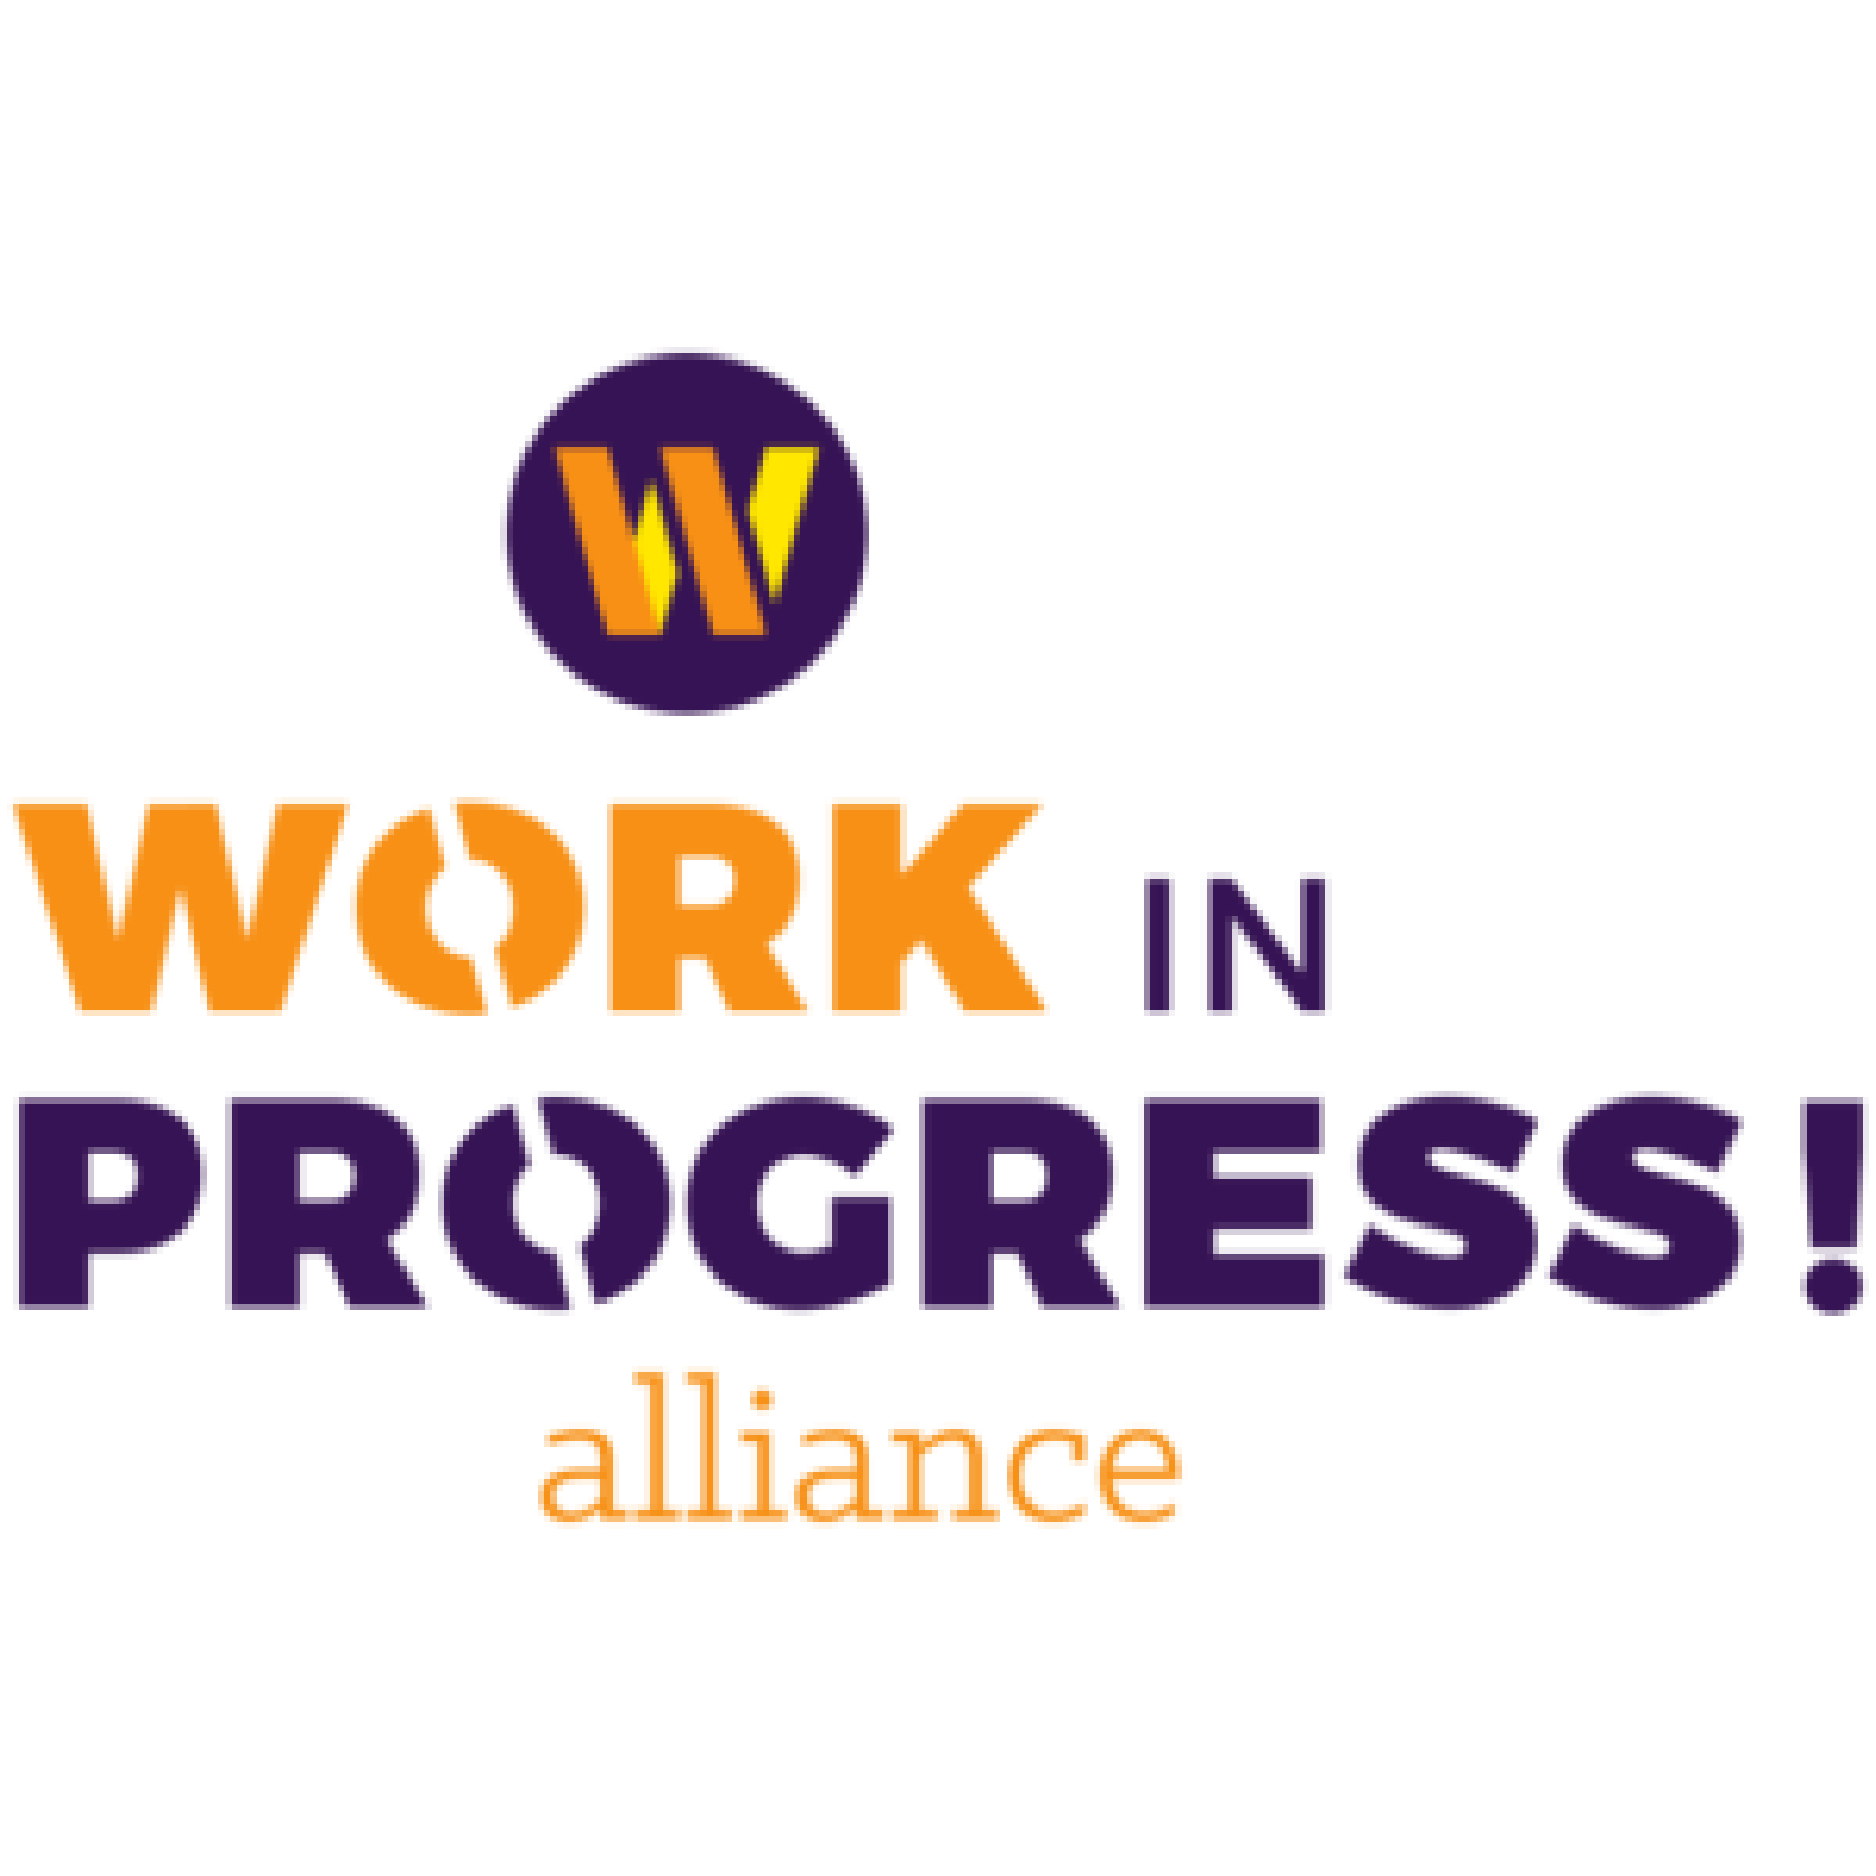 Work in Progress! Alliance